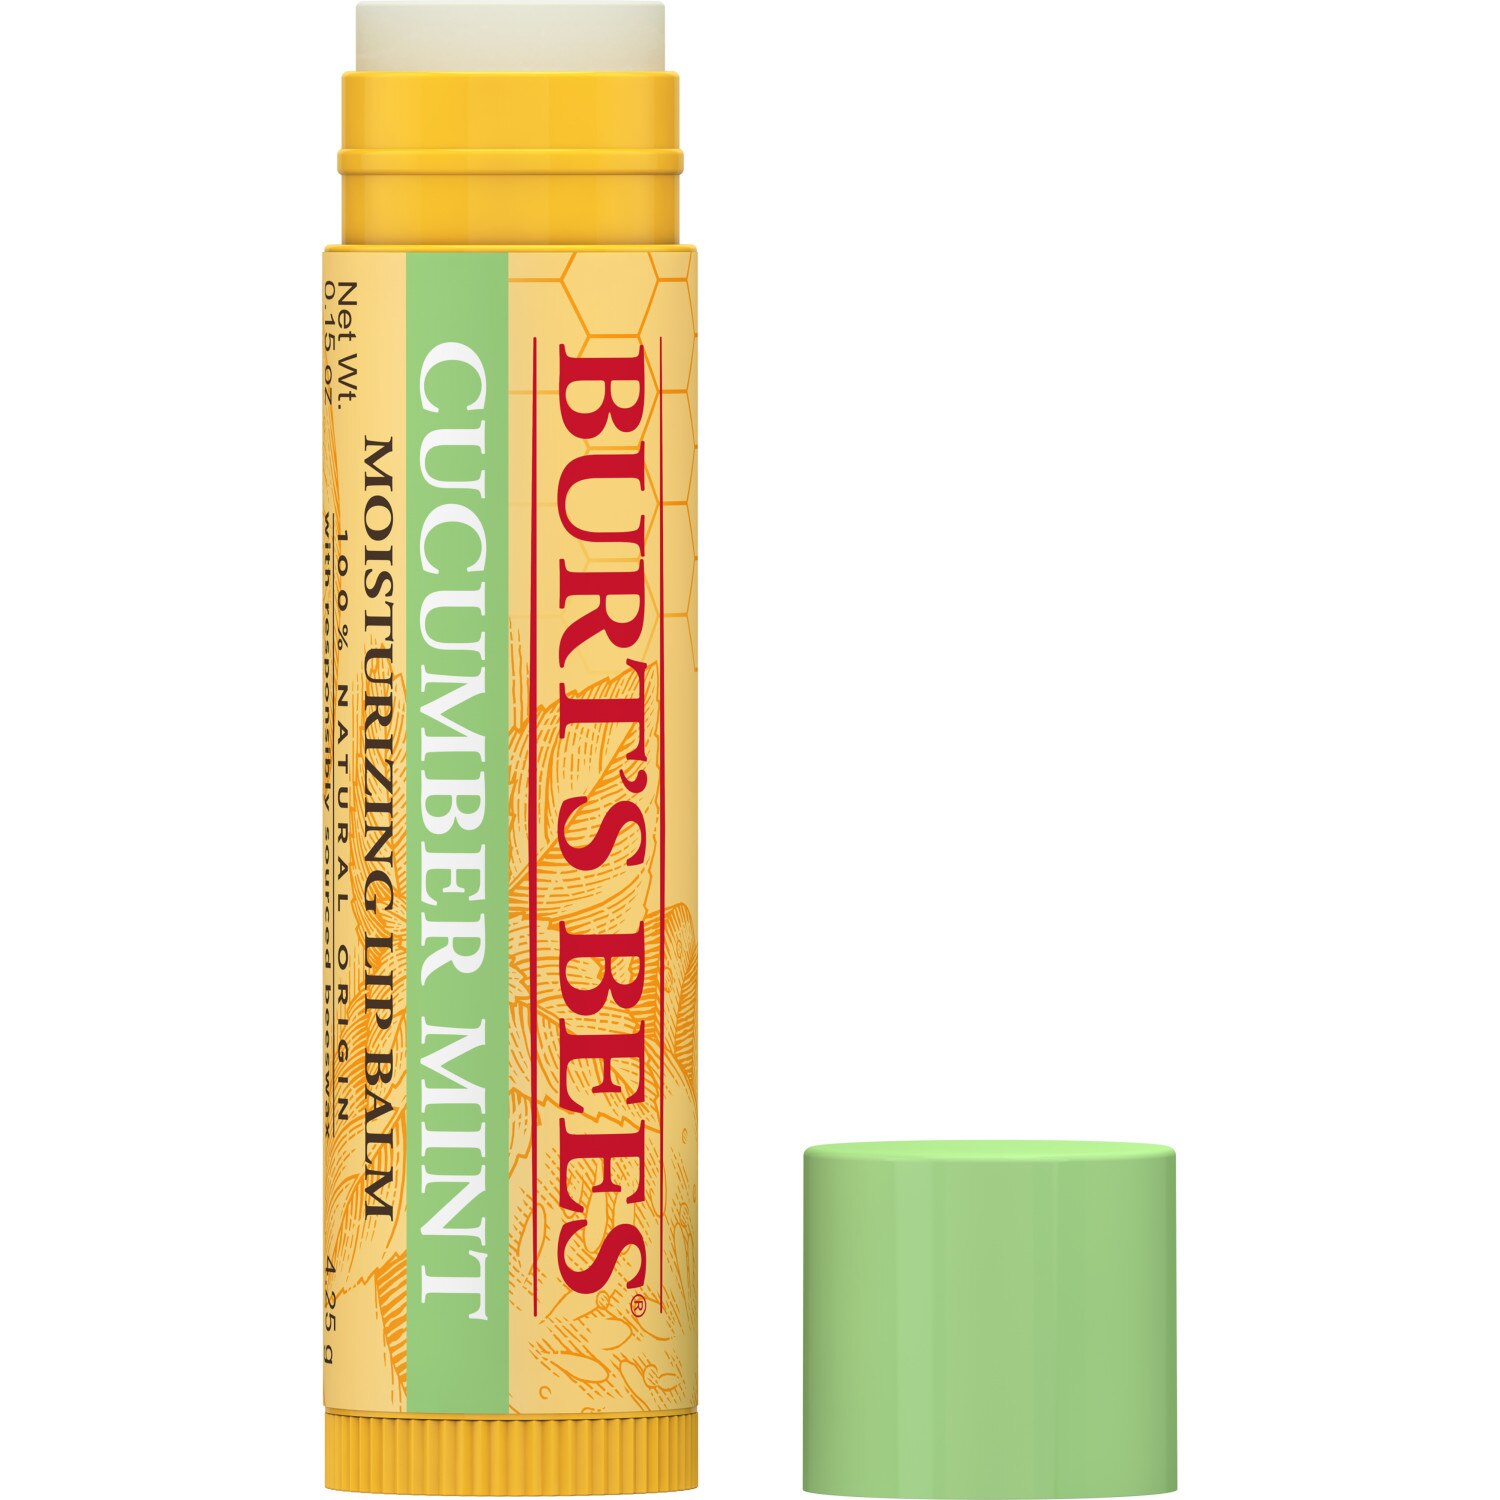 Burt's Bees Lip Balm, Cucumber Mint